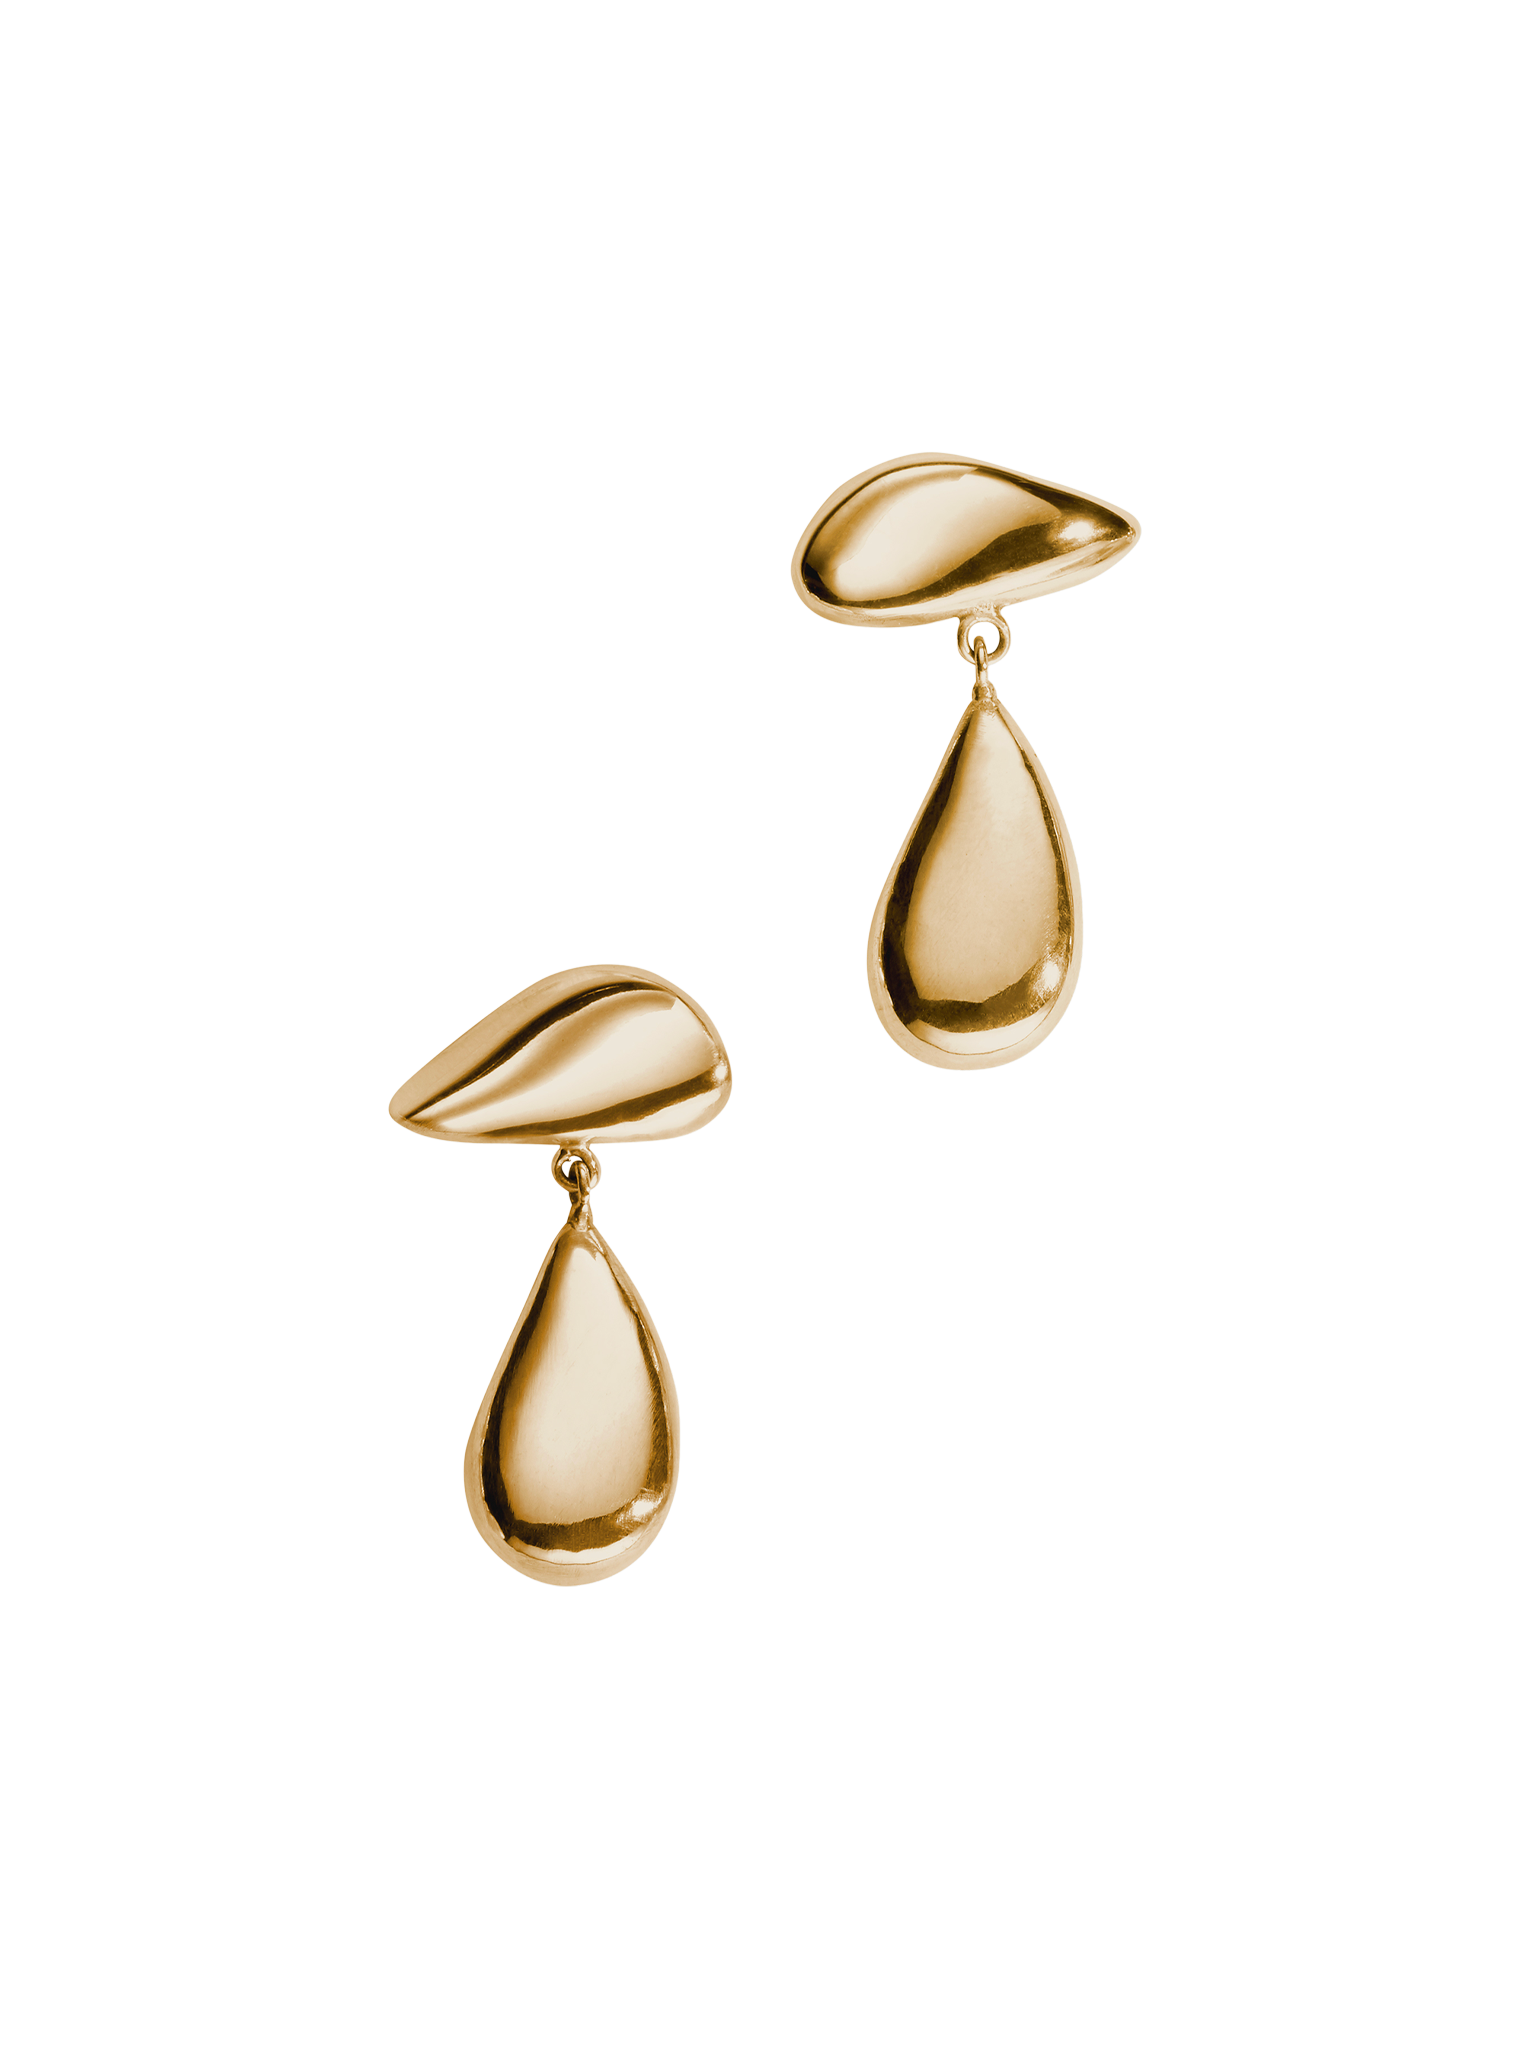 Alyce earrings in gold vermeil